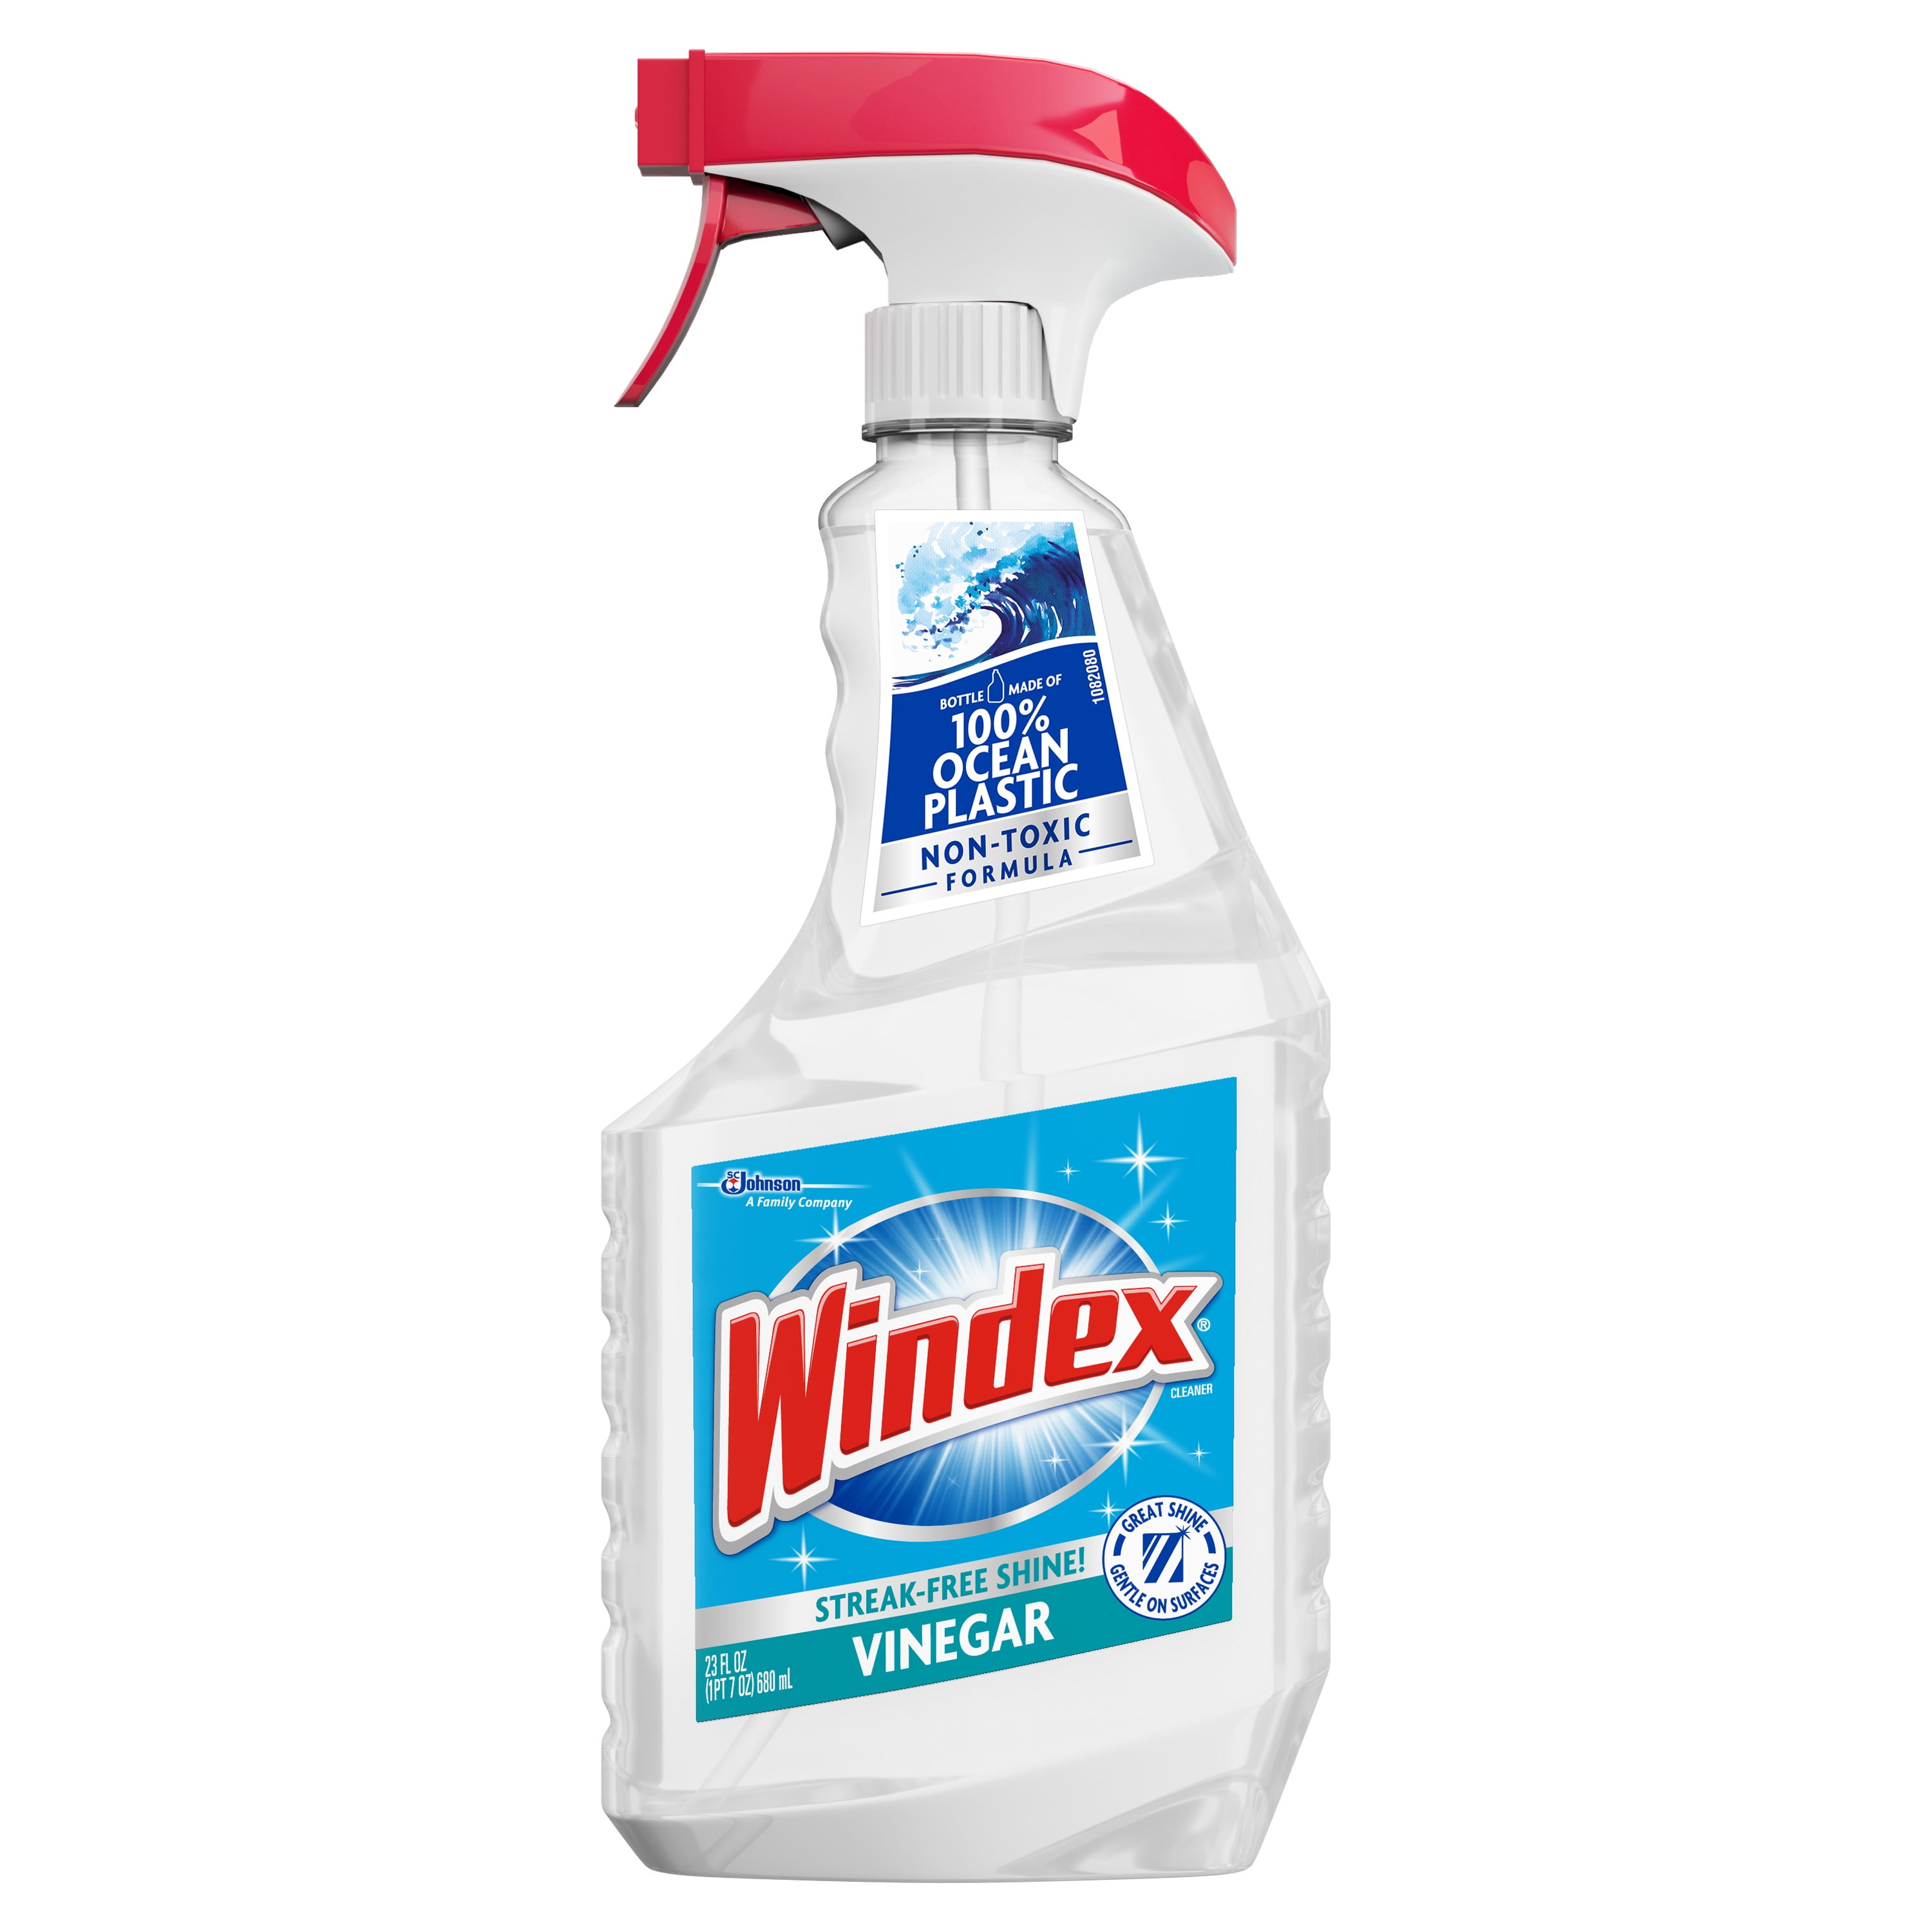 Windex Glass Cleaner With Vinegar Trigger Bottle 23 Fl Oz